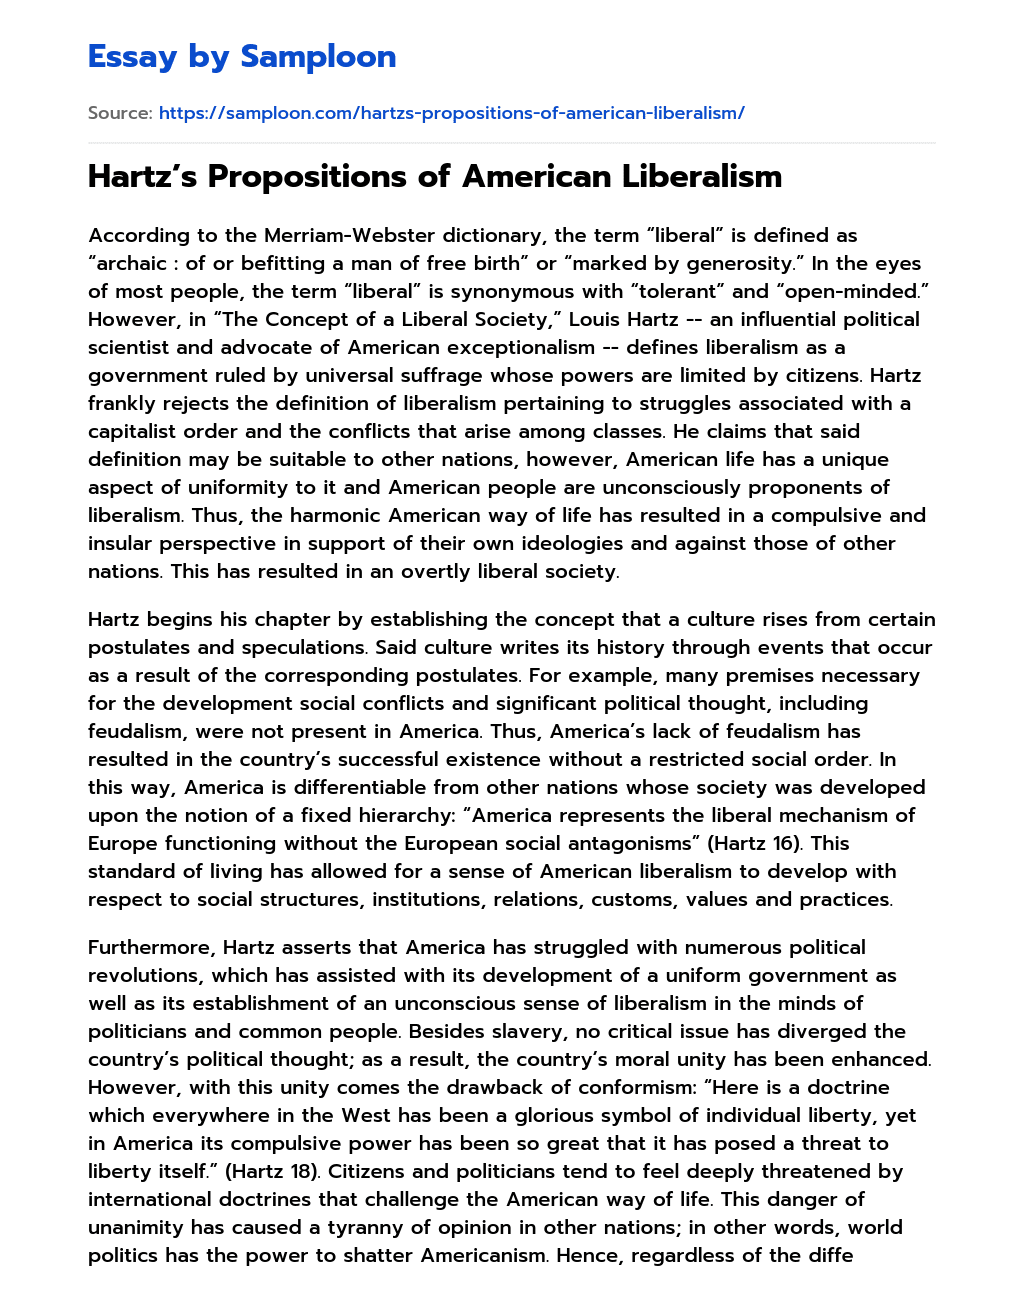 Hartz’s Propositions of American Liberalism essay